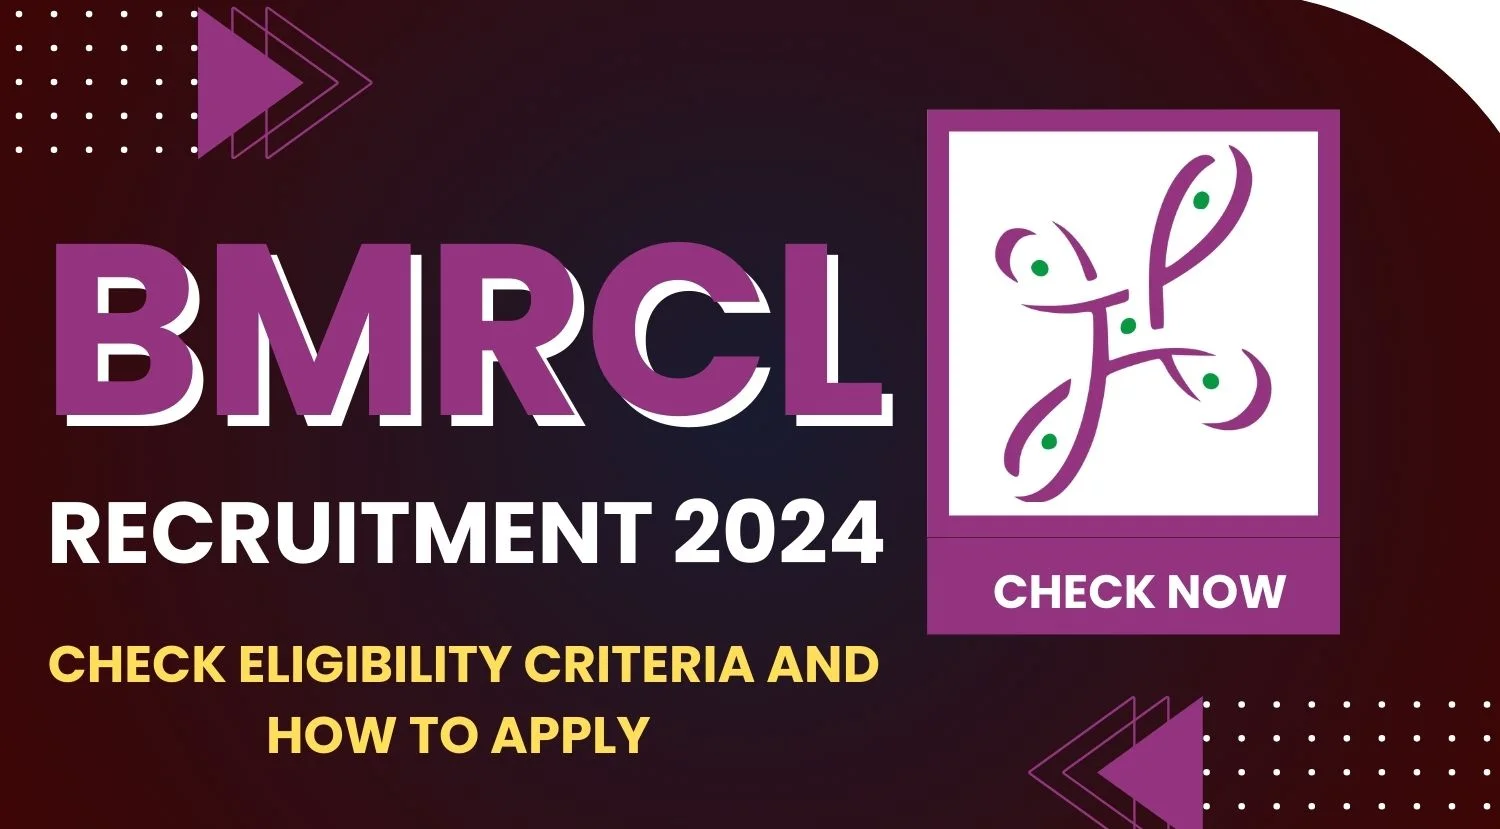 BMRCL Recruitment 2024